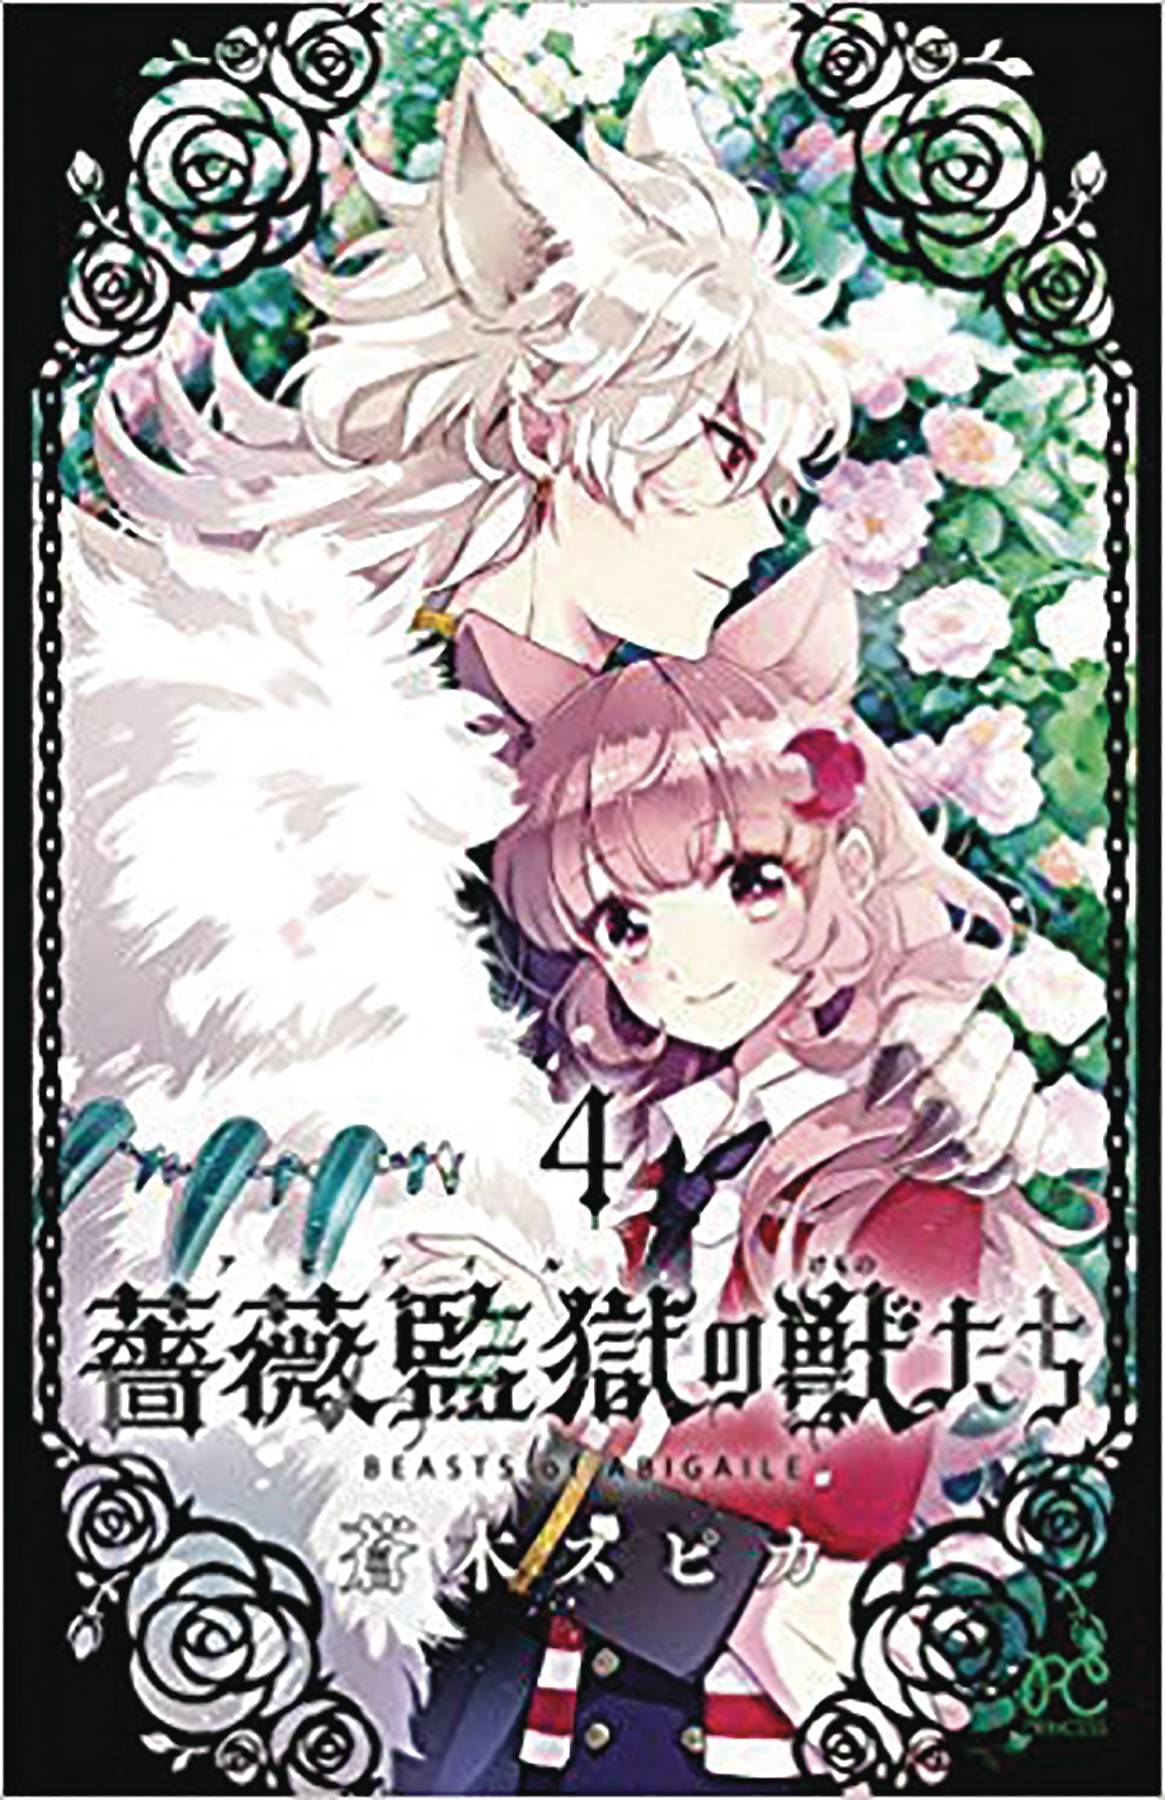 Beasts of Abigaile Manga Volume 4